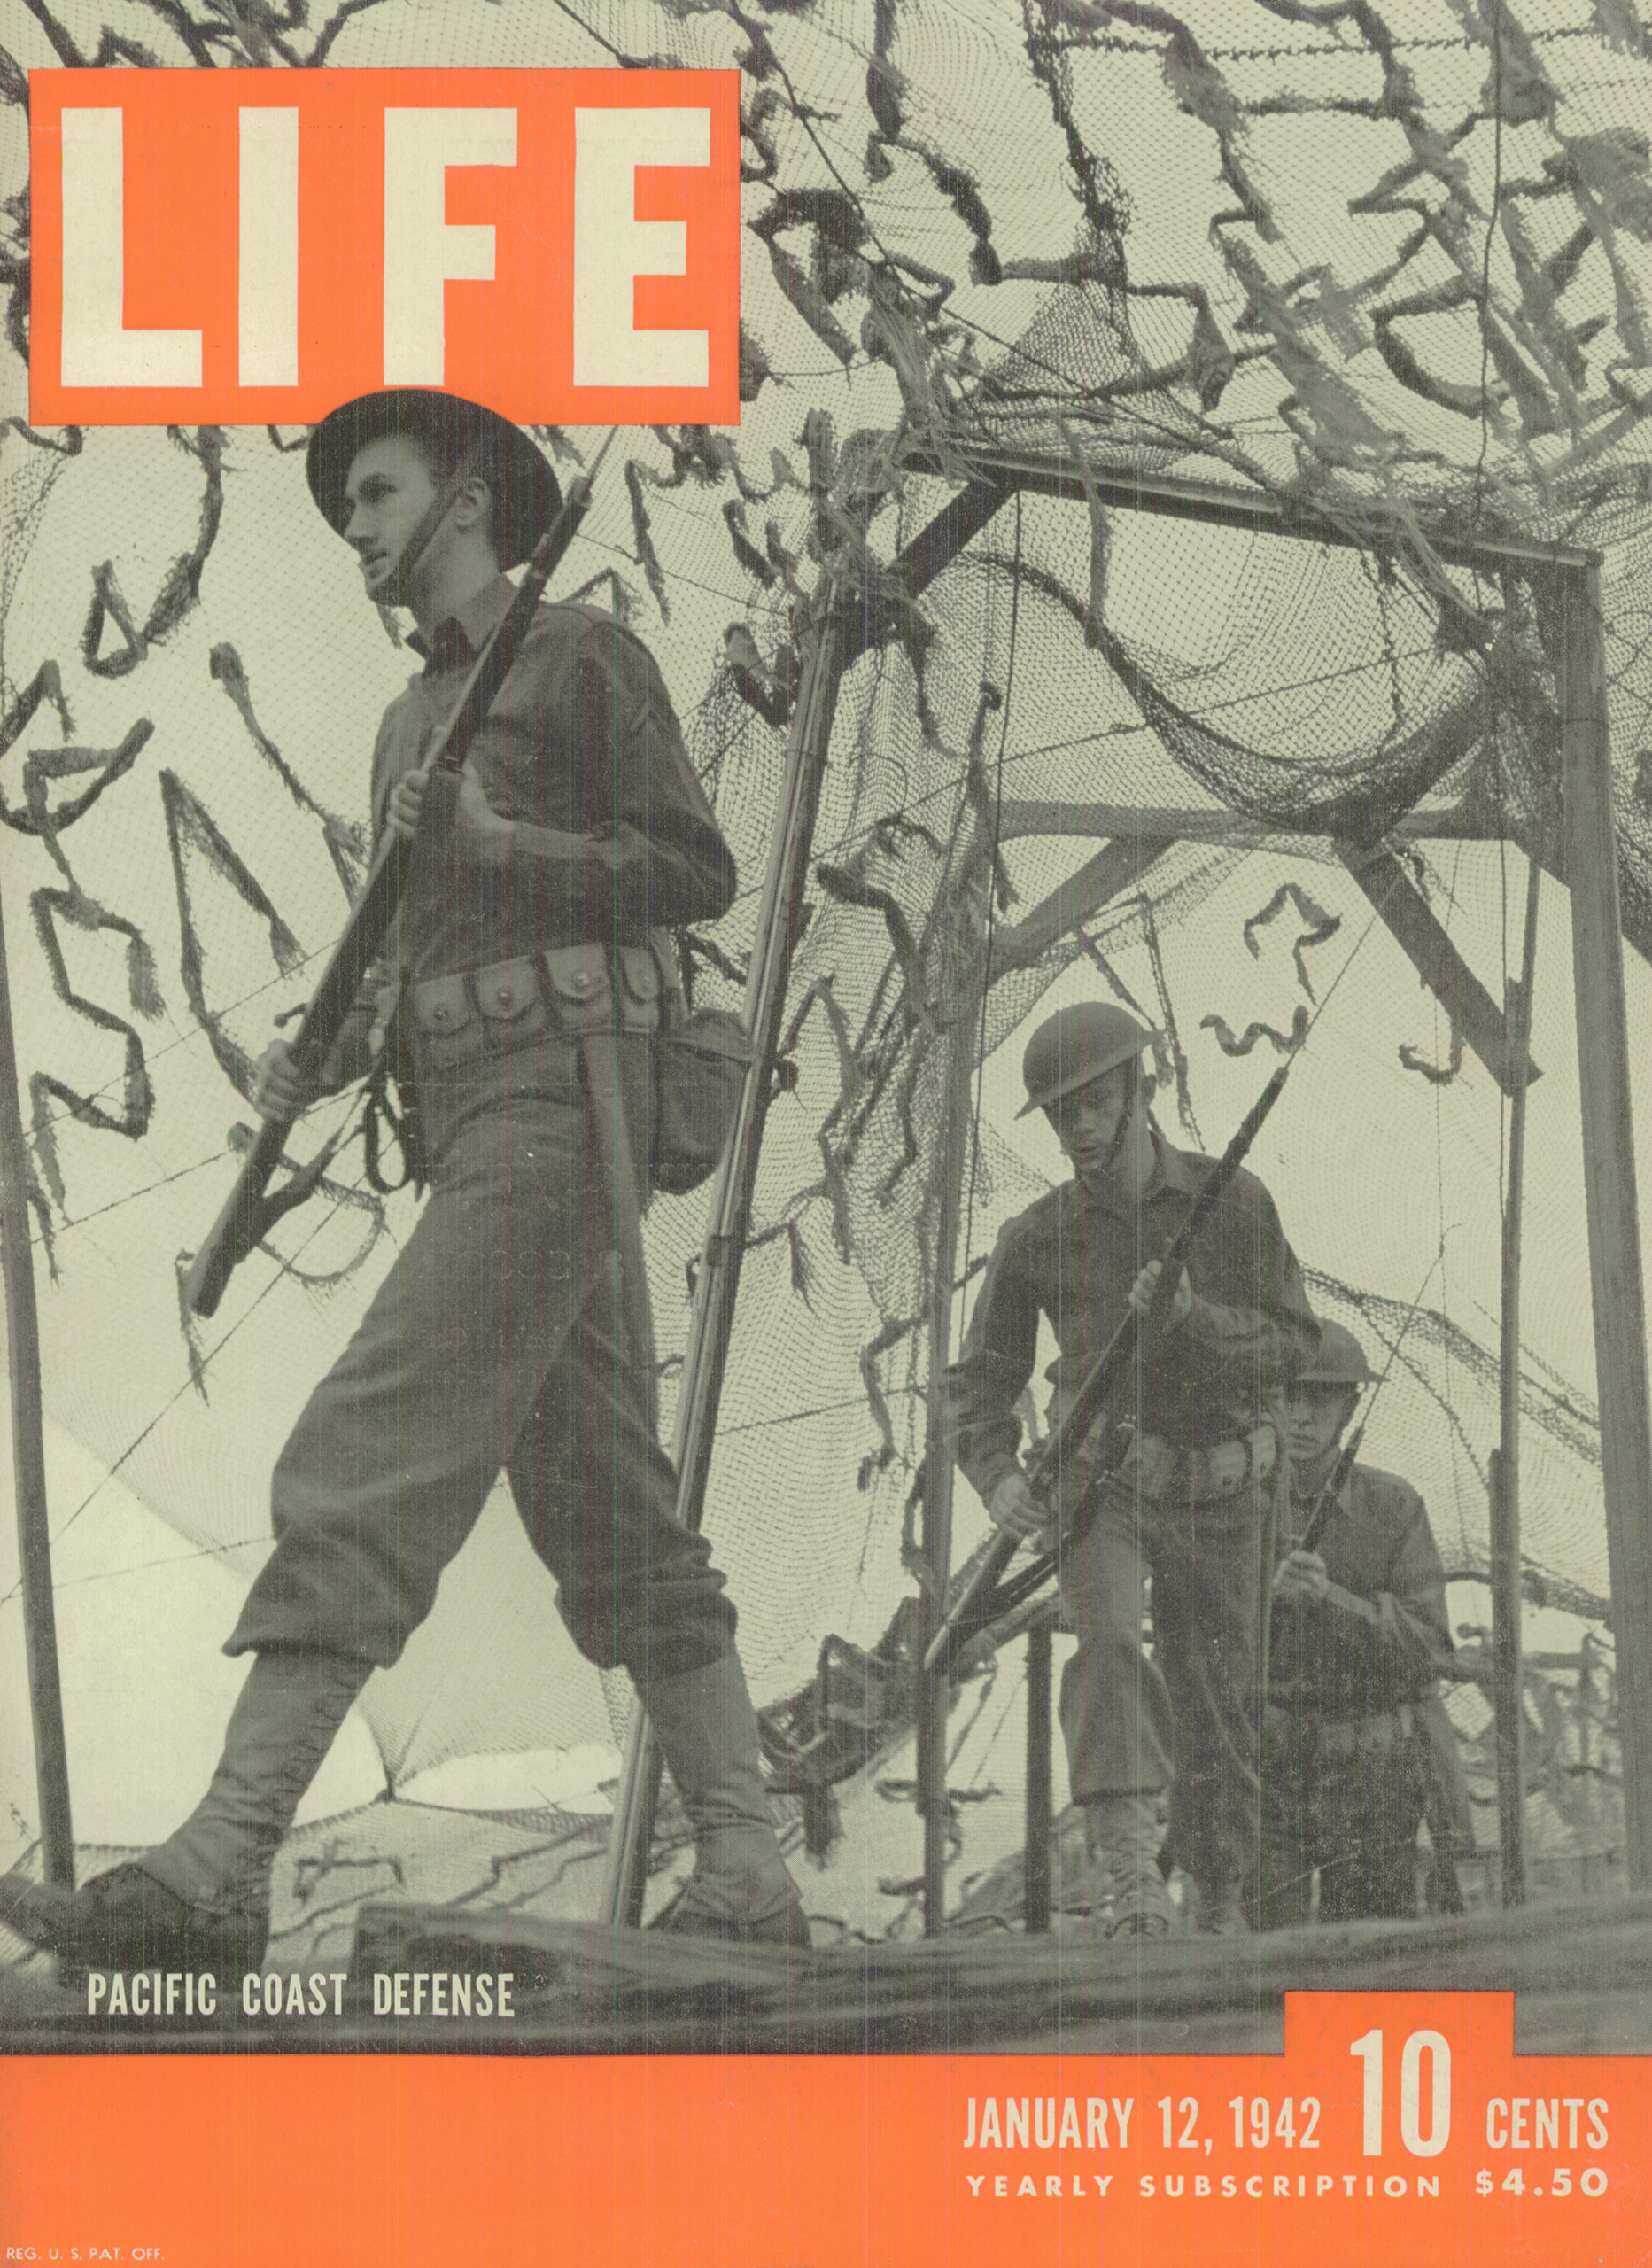 Jan. 12, 1942 cover of LIFE magazine.